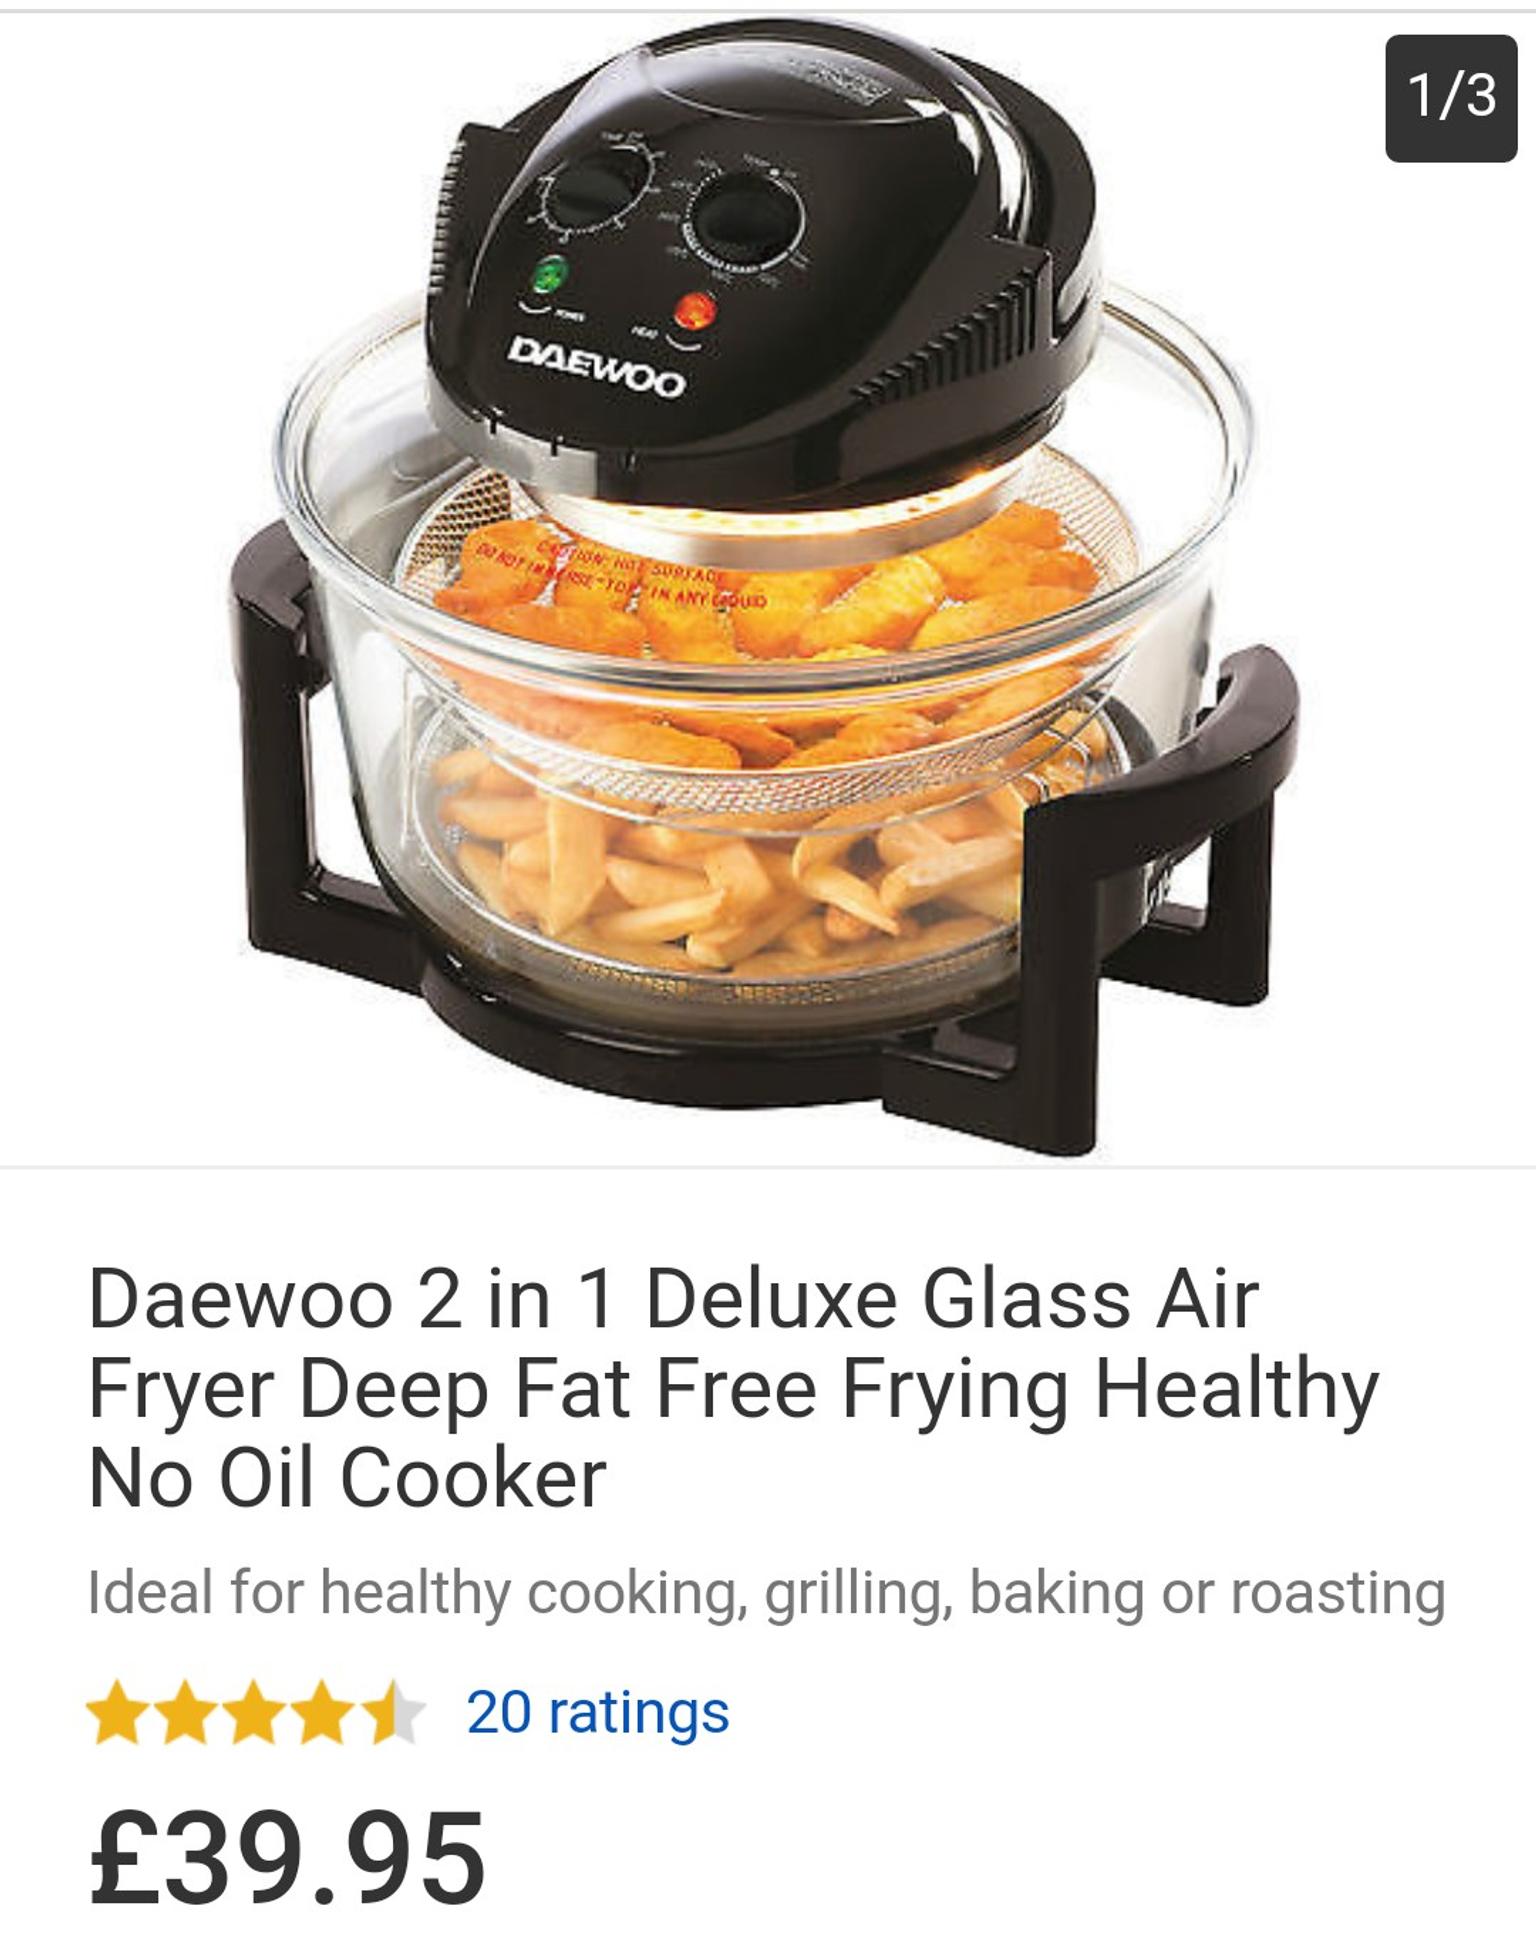 Daewoo 2 in 1 Deluxe Glass Air Fryer Deep Fat Free Frying Healthy No Oil Cooker